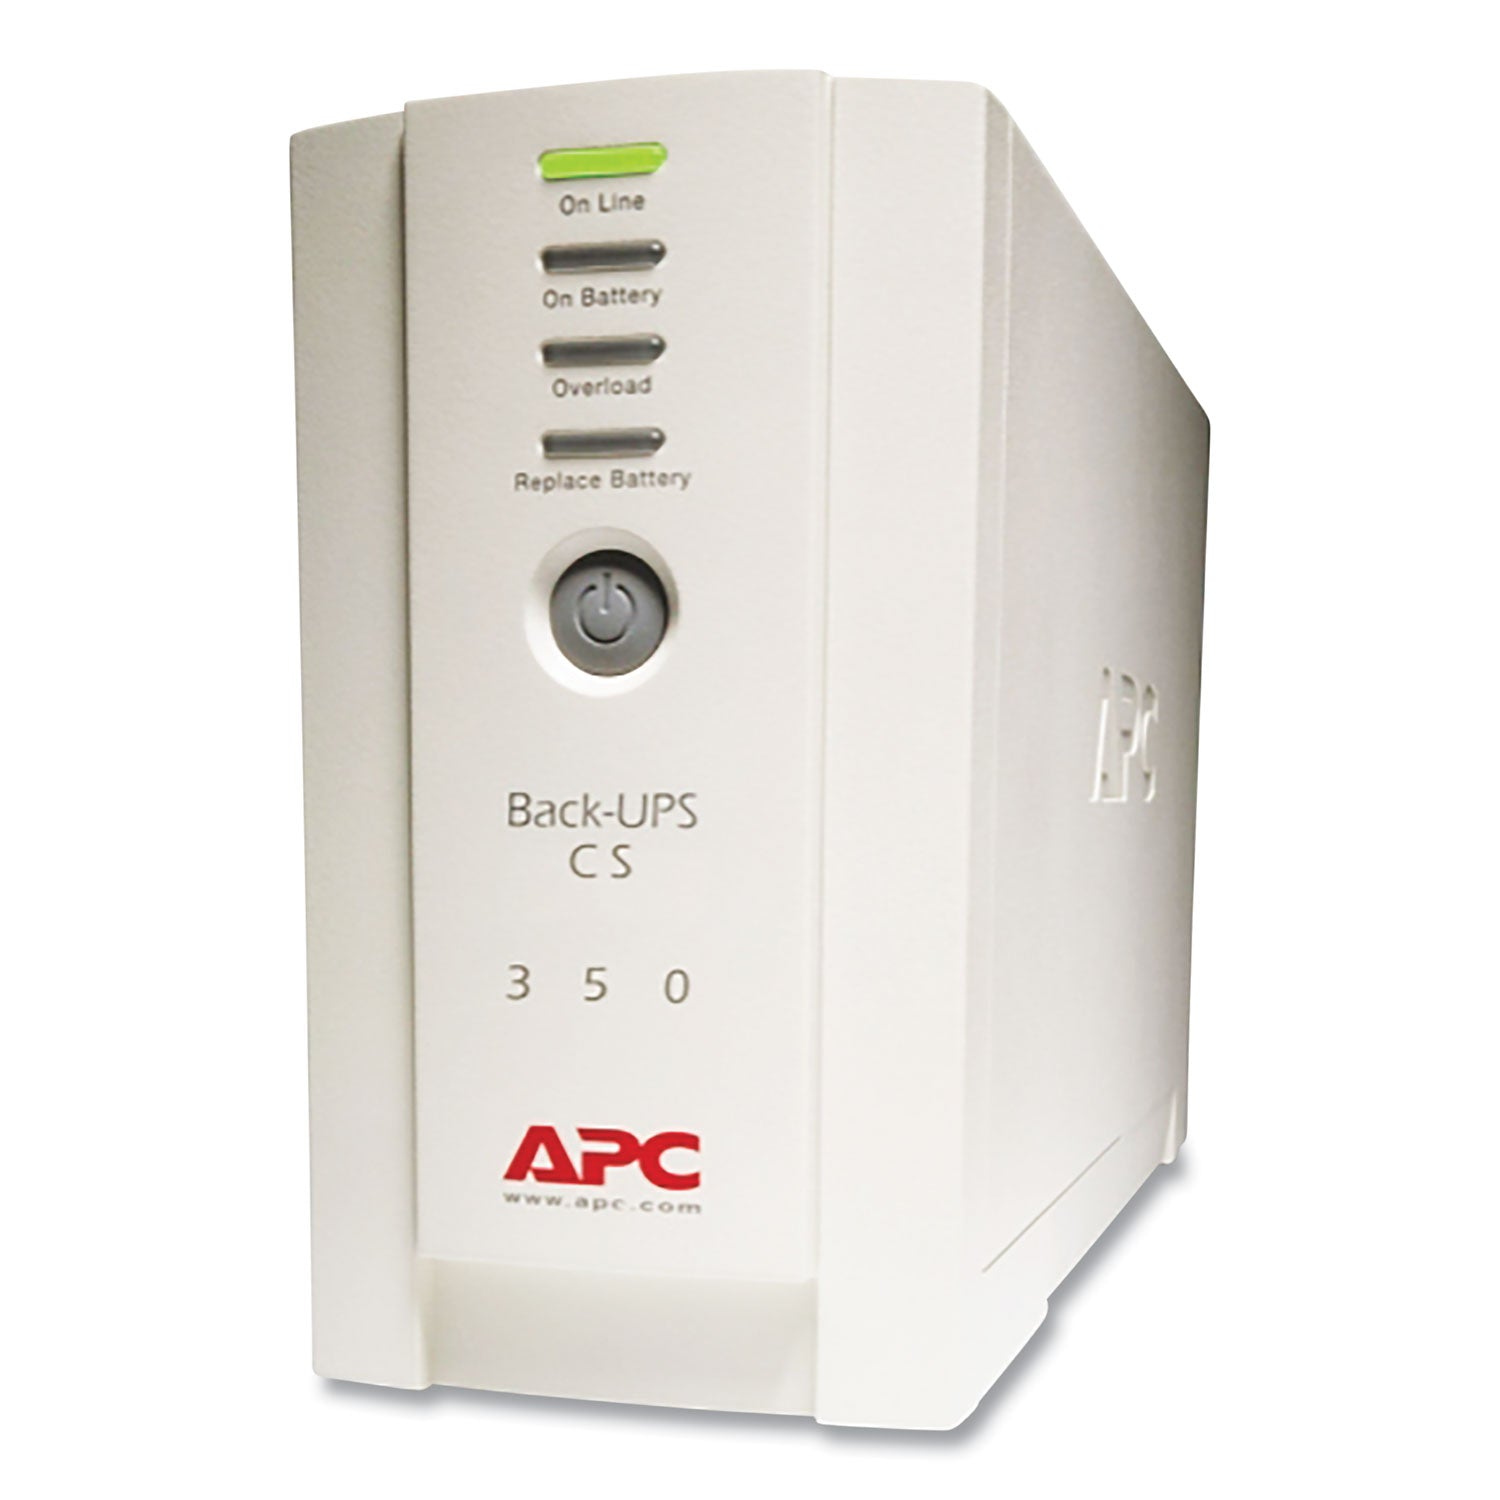 APC - Back-UPS CS Battery Backup System Six-Outlet 350 Volt-Amps, Sold as 1 EA - 2